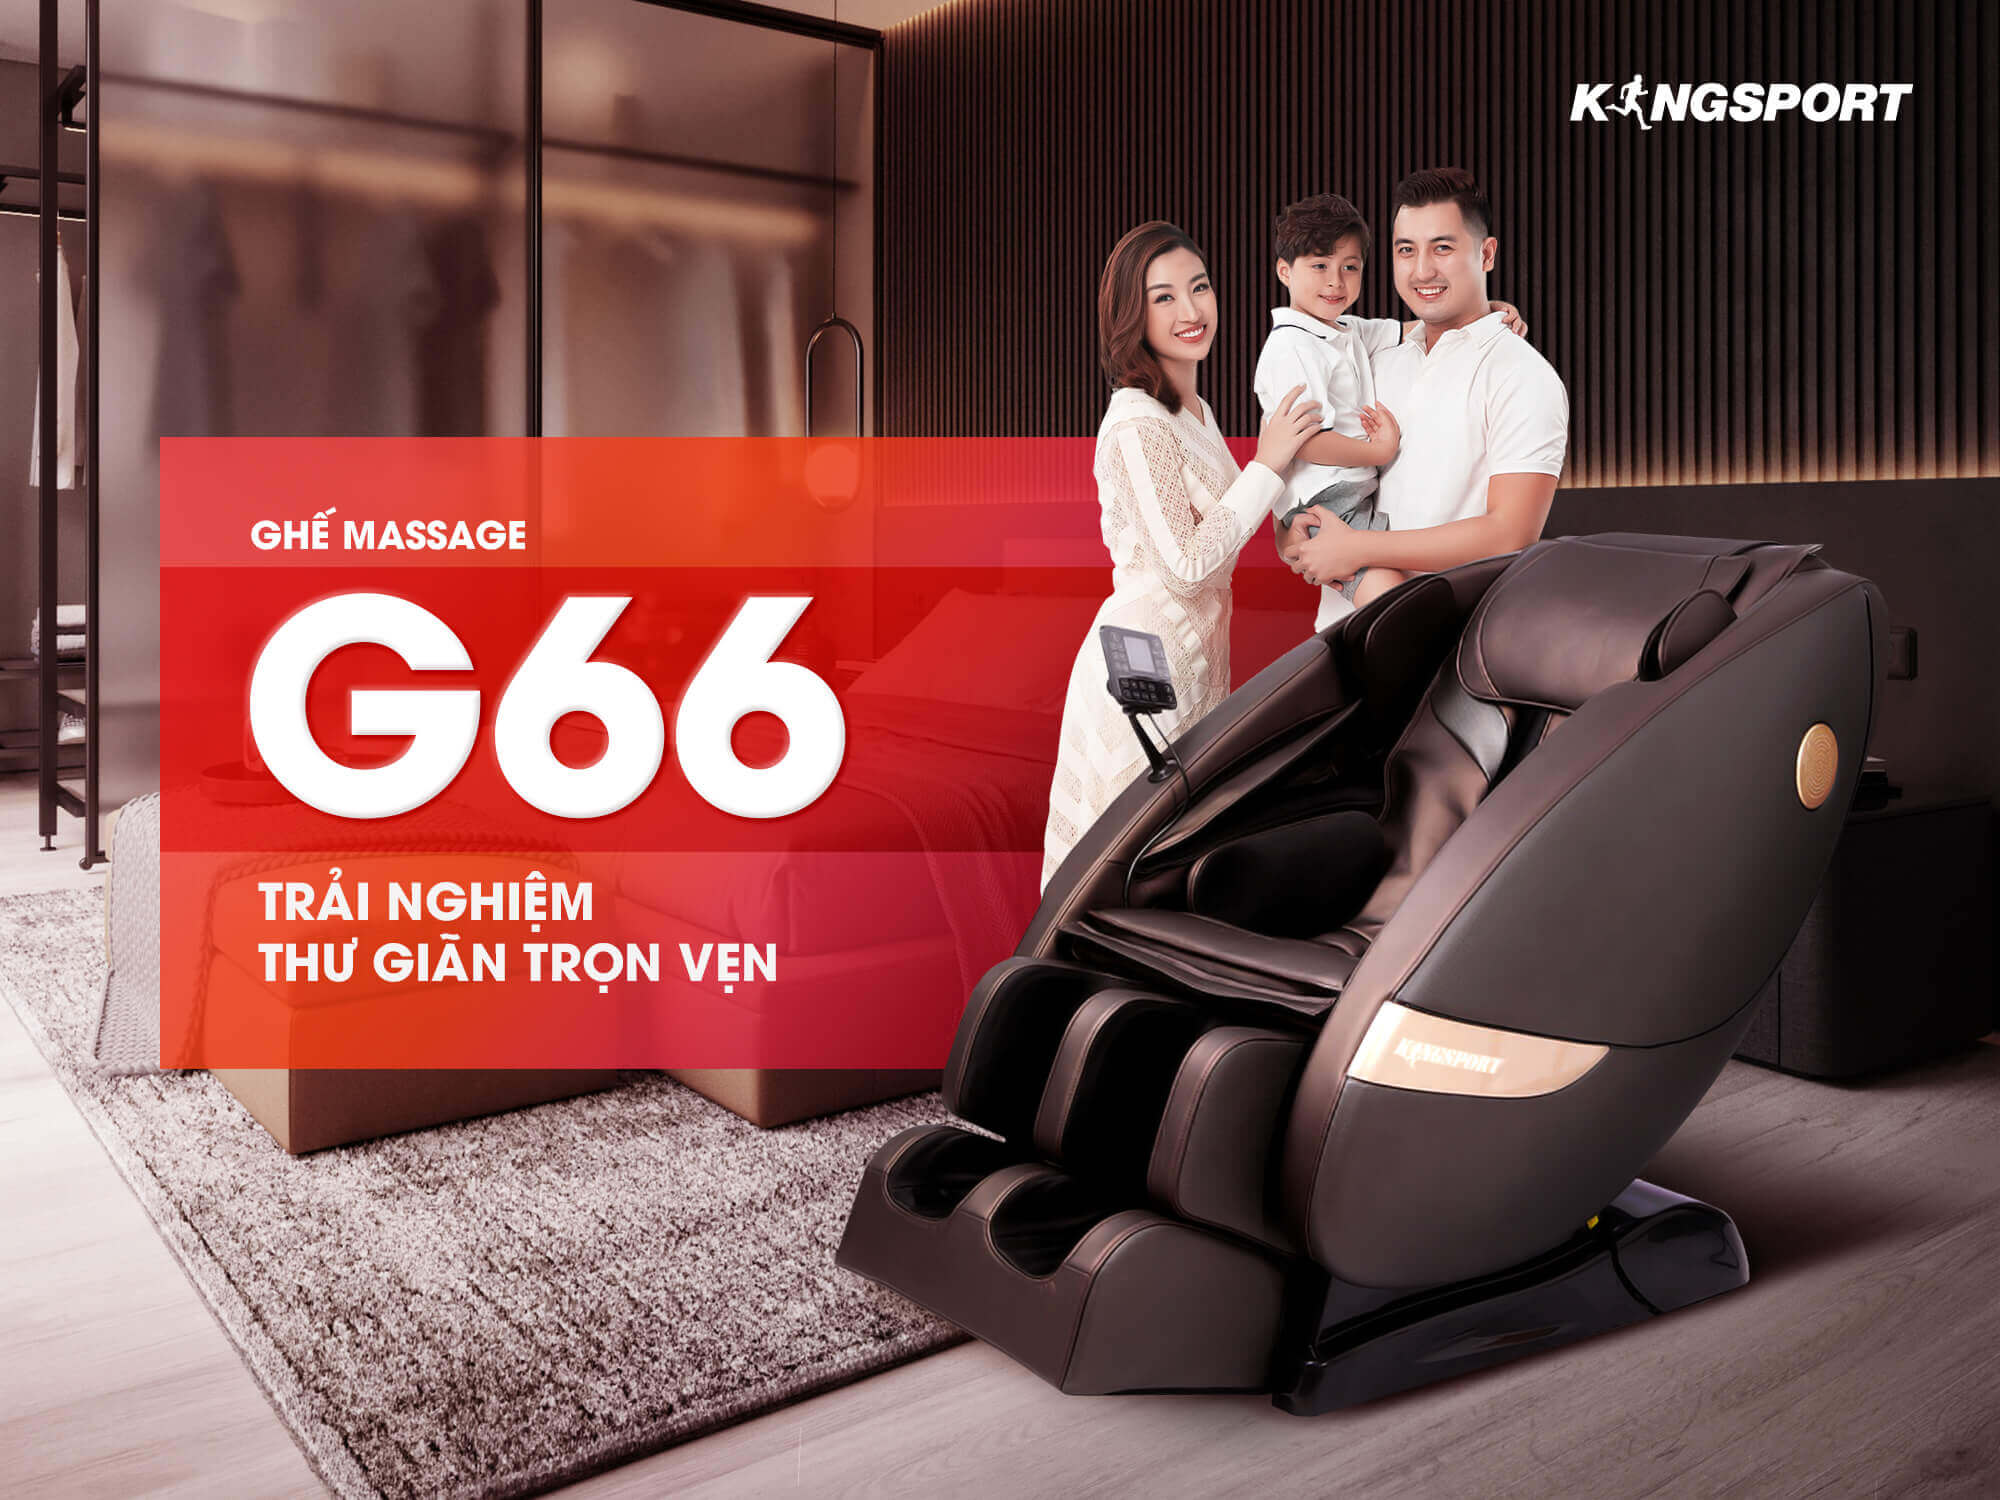 Ghế massage Kingsport G66